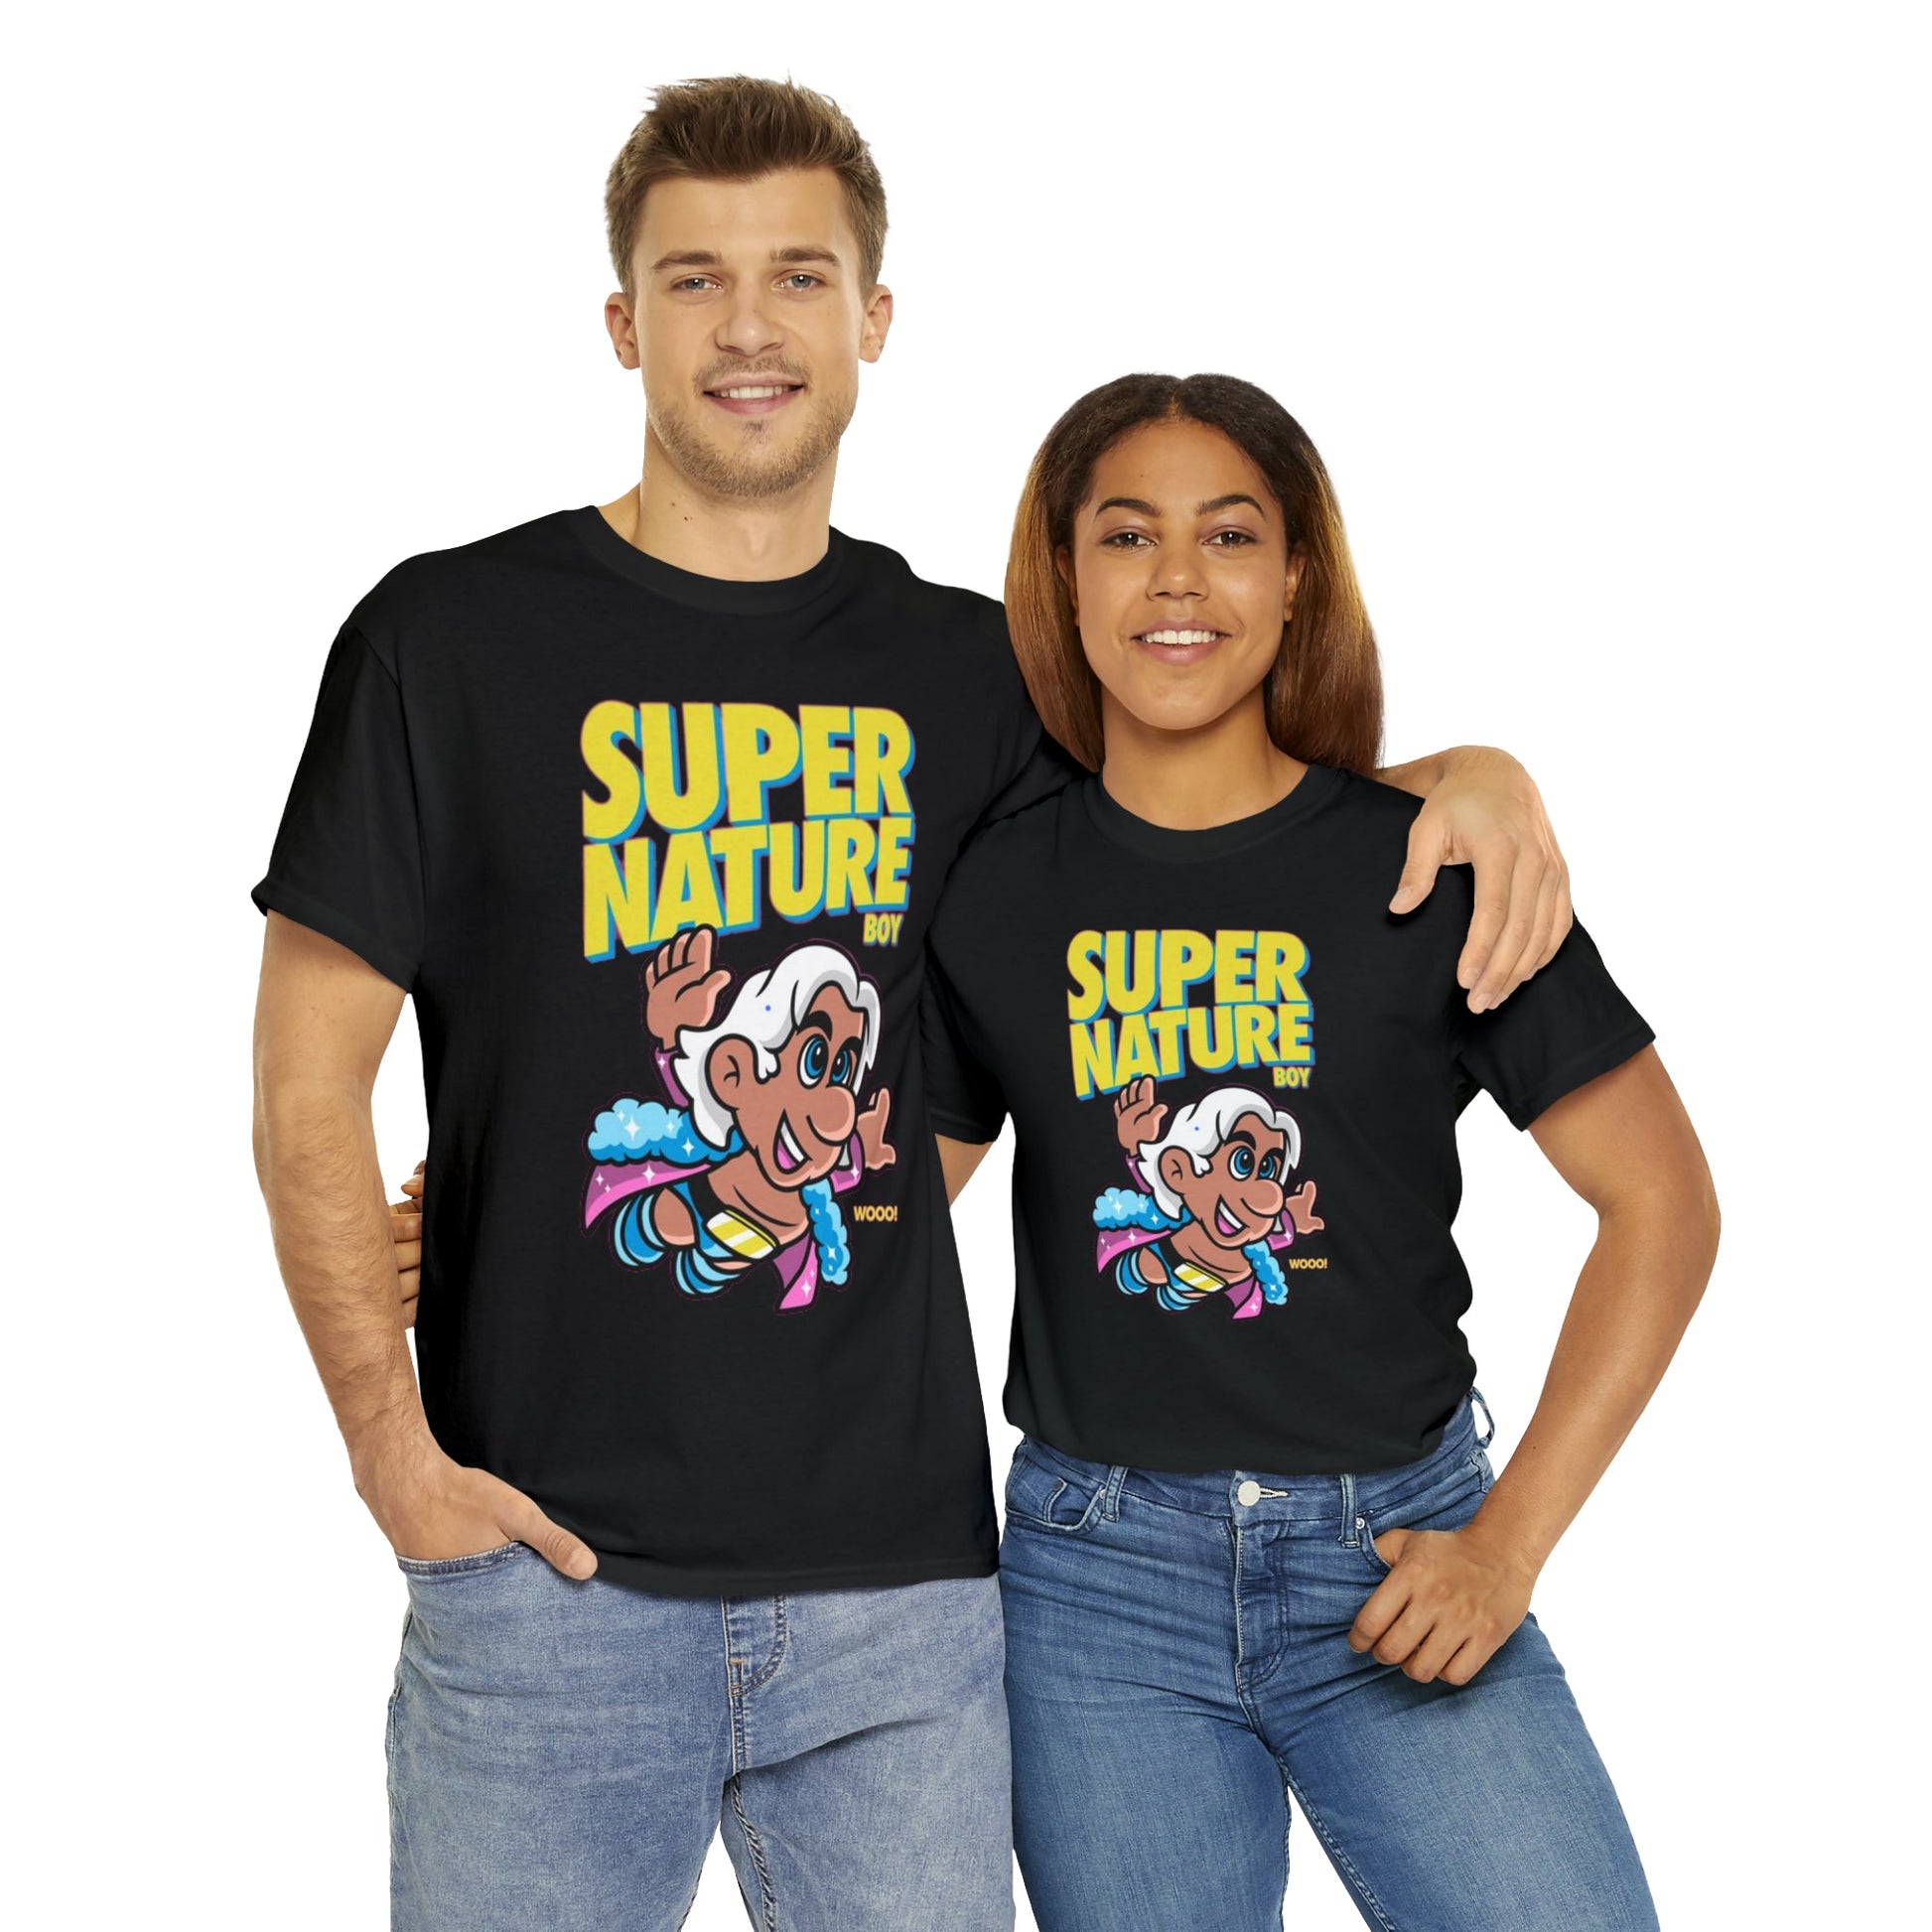 Super Nature Boy Ric Flair T-Shirt - RetroTeeShop